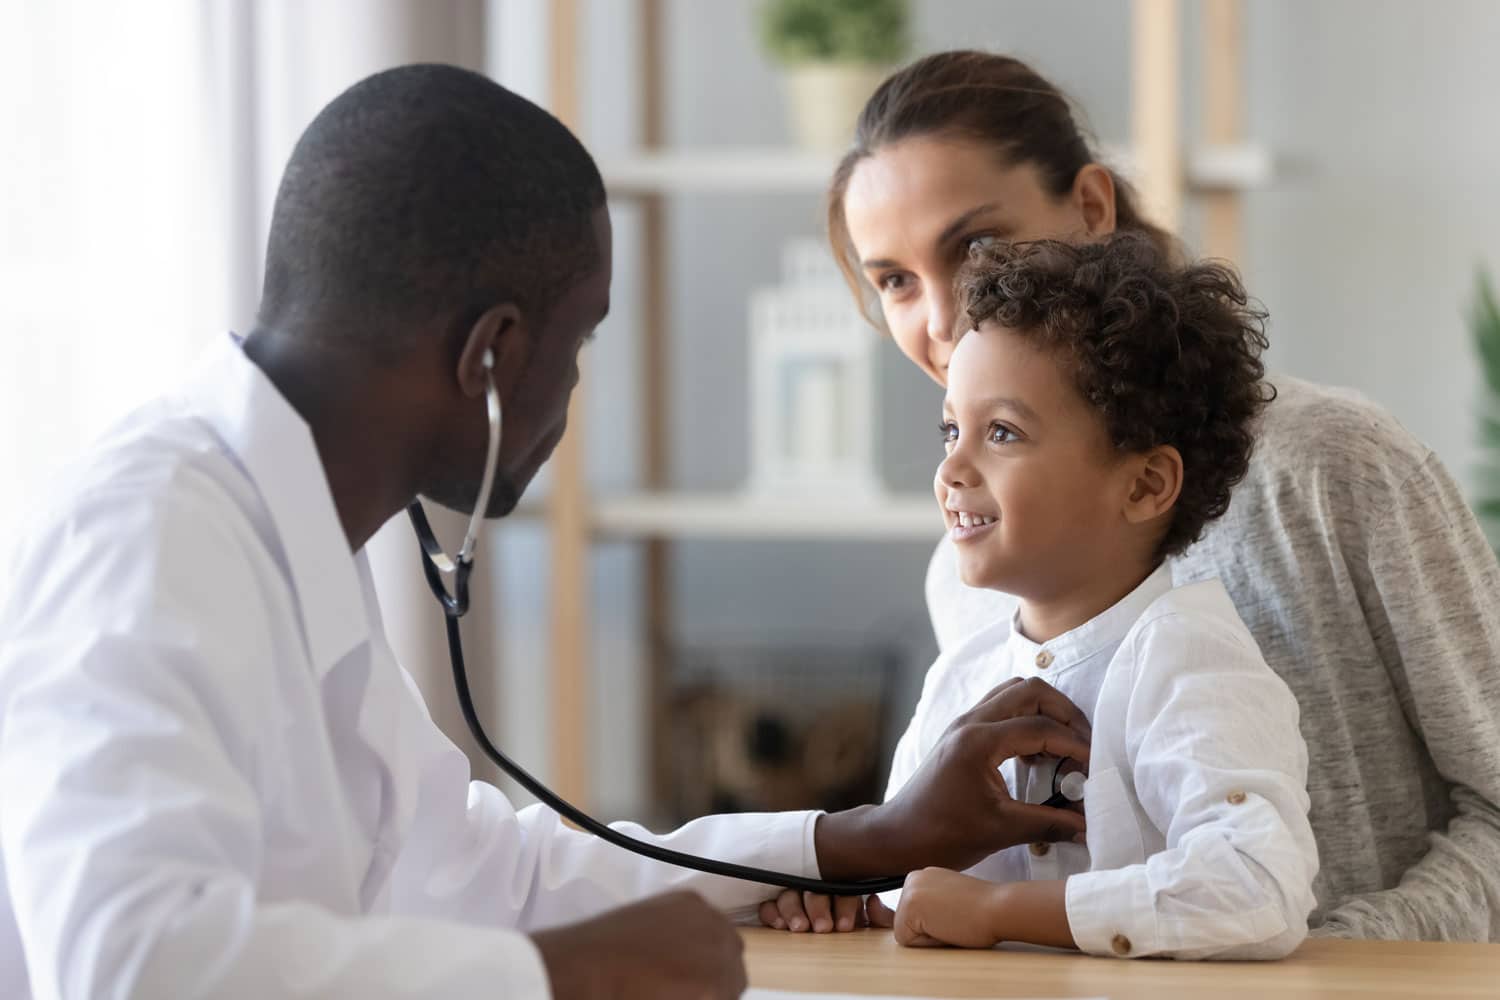 Pediatrics care and management solutions